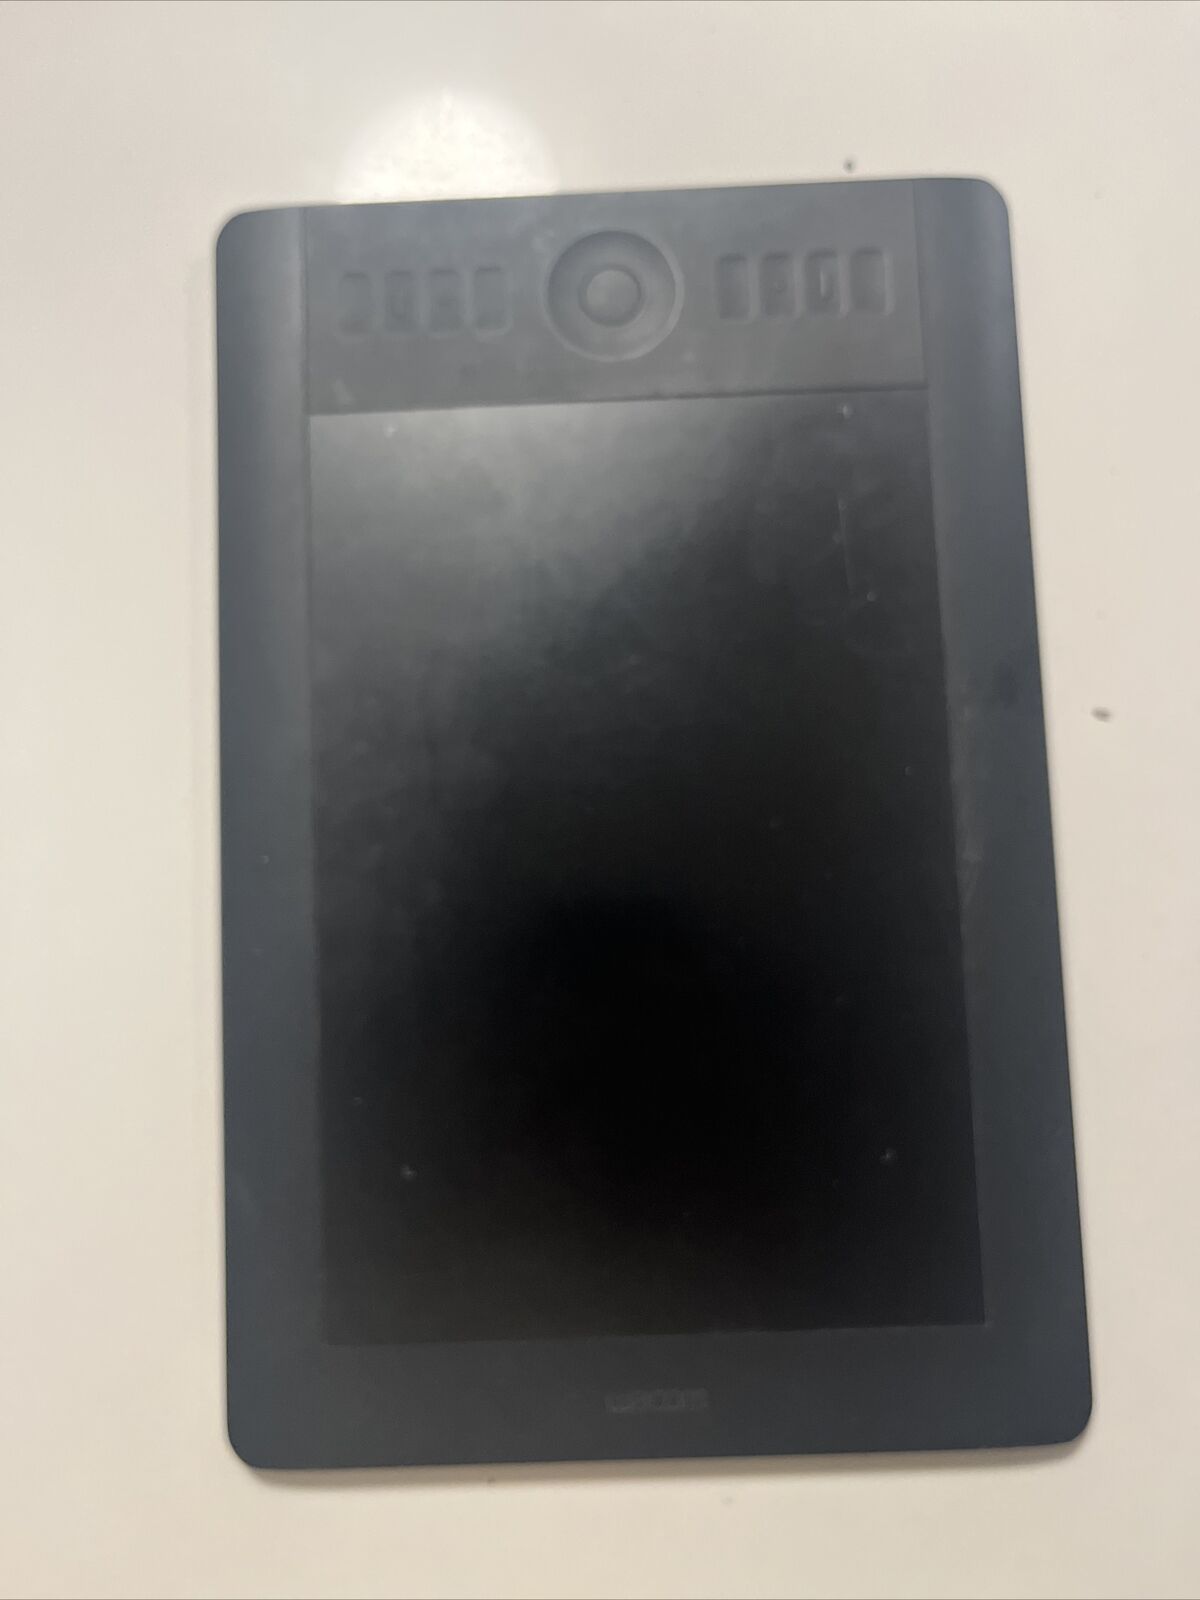 Wacom Intuos5 Touch Small Pen Tablet (PTH450) - Black